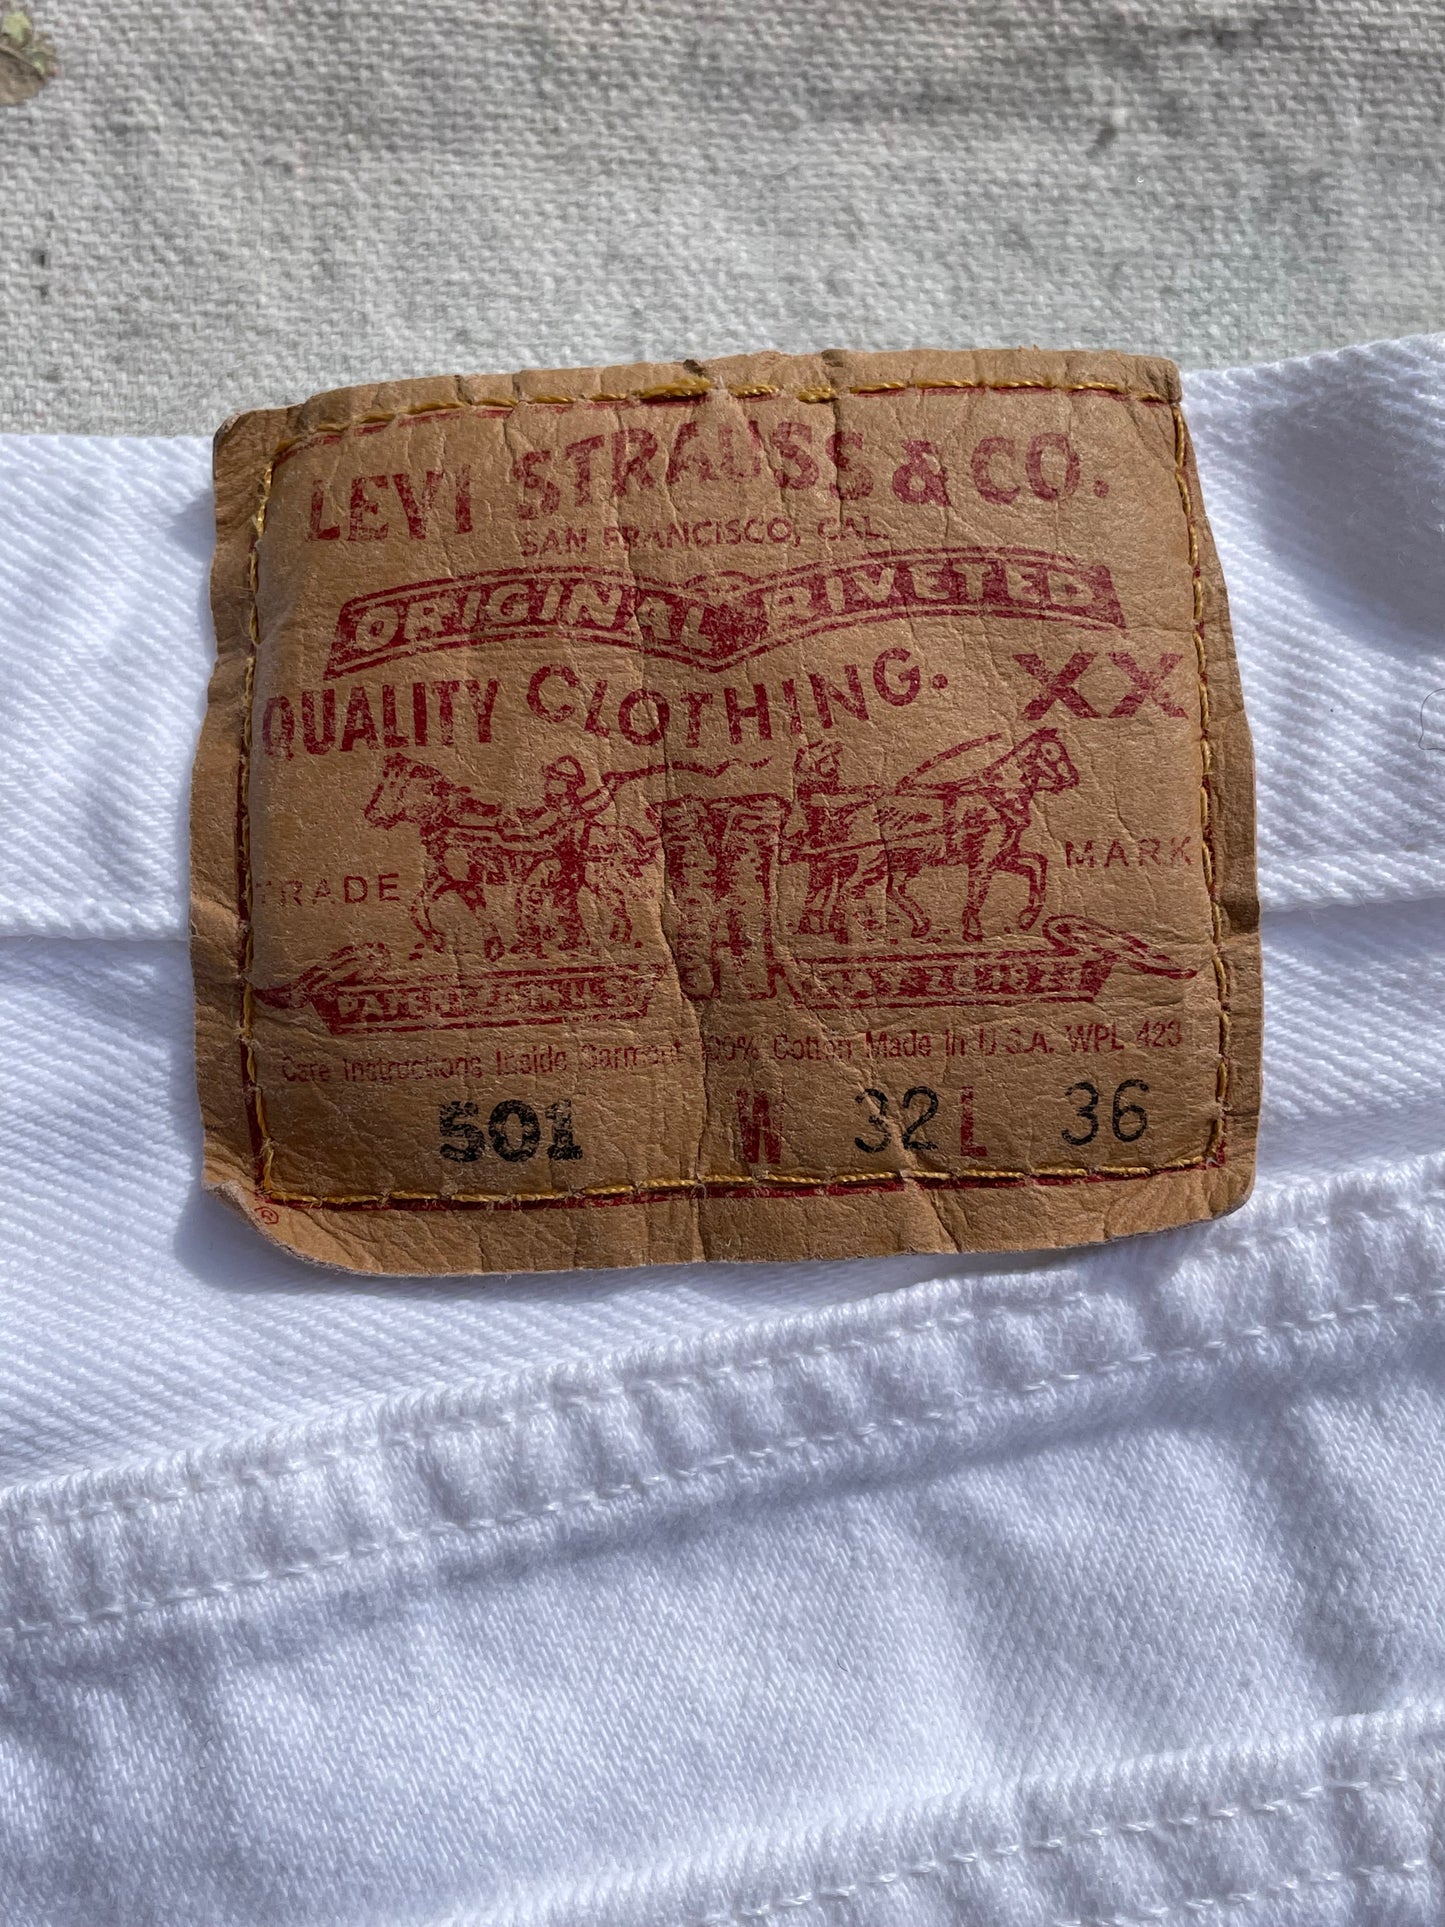 90s White Levi’s 501 Jeans